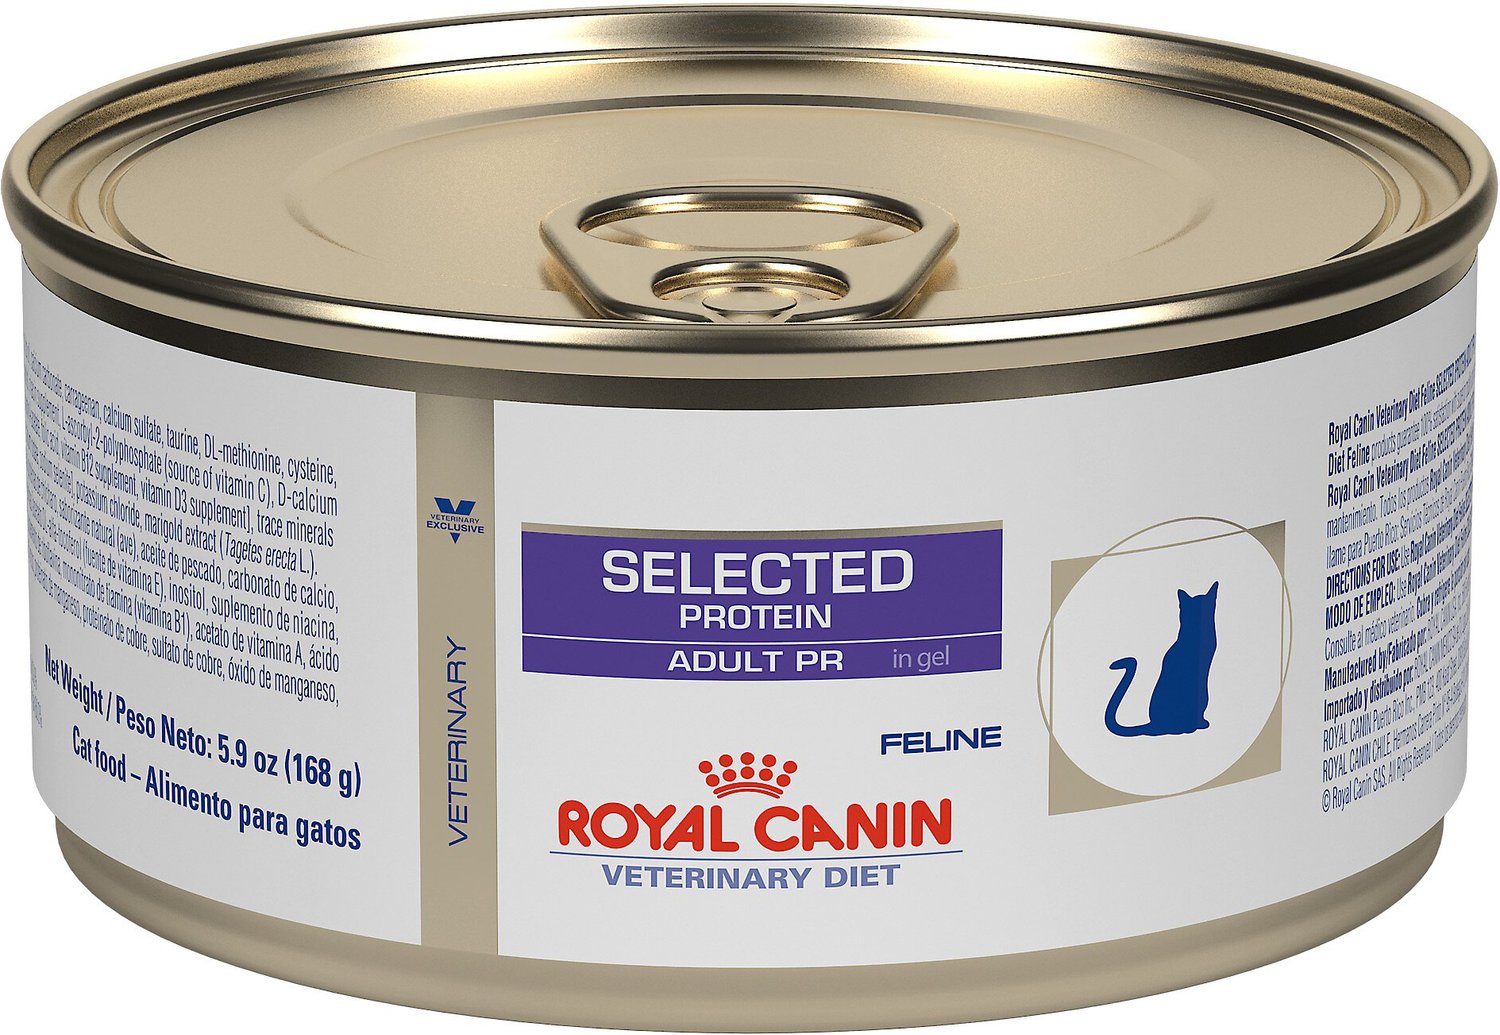 Royal canin veterinary diet